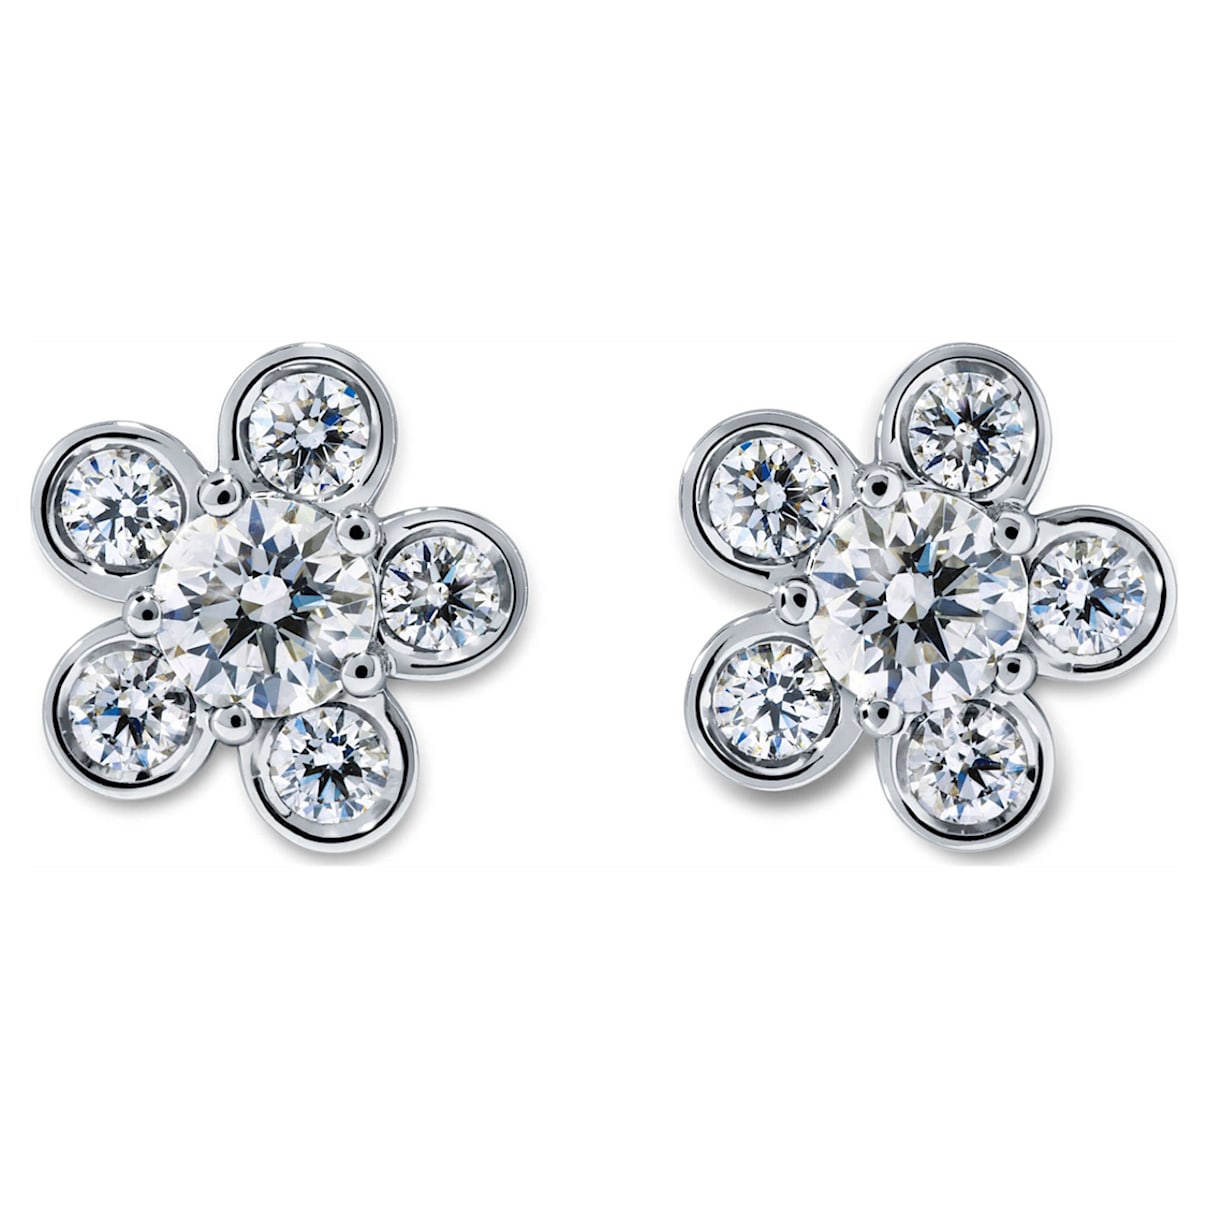 Bloom Stud Earrings, Swarovski Created Diamonds, 18K White Gold